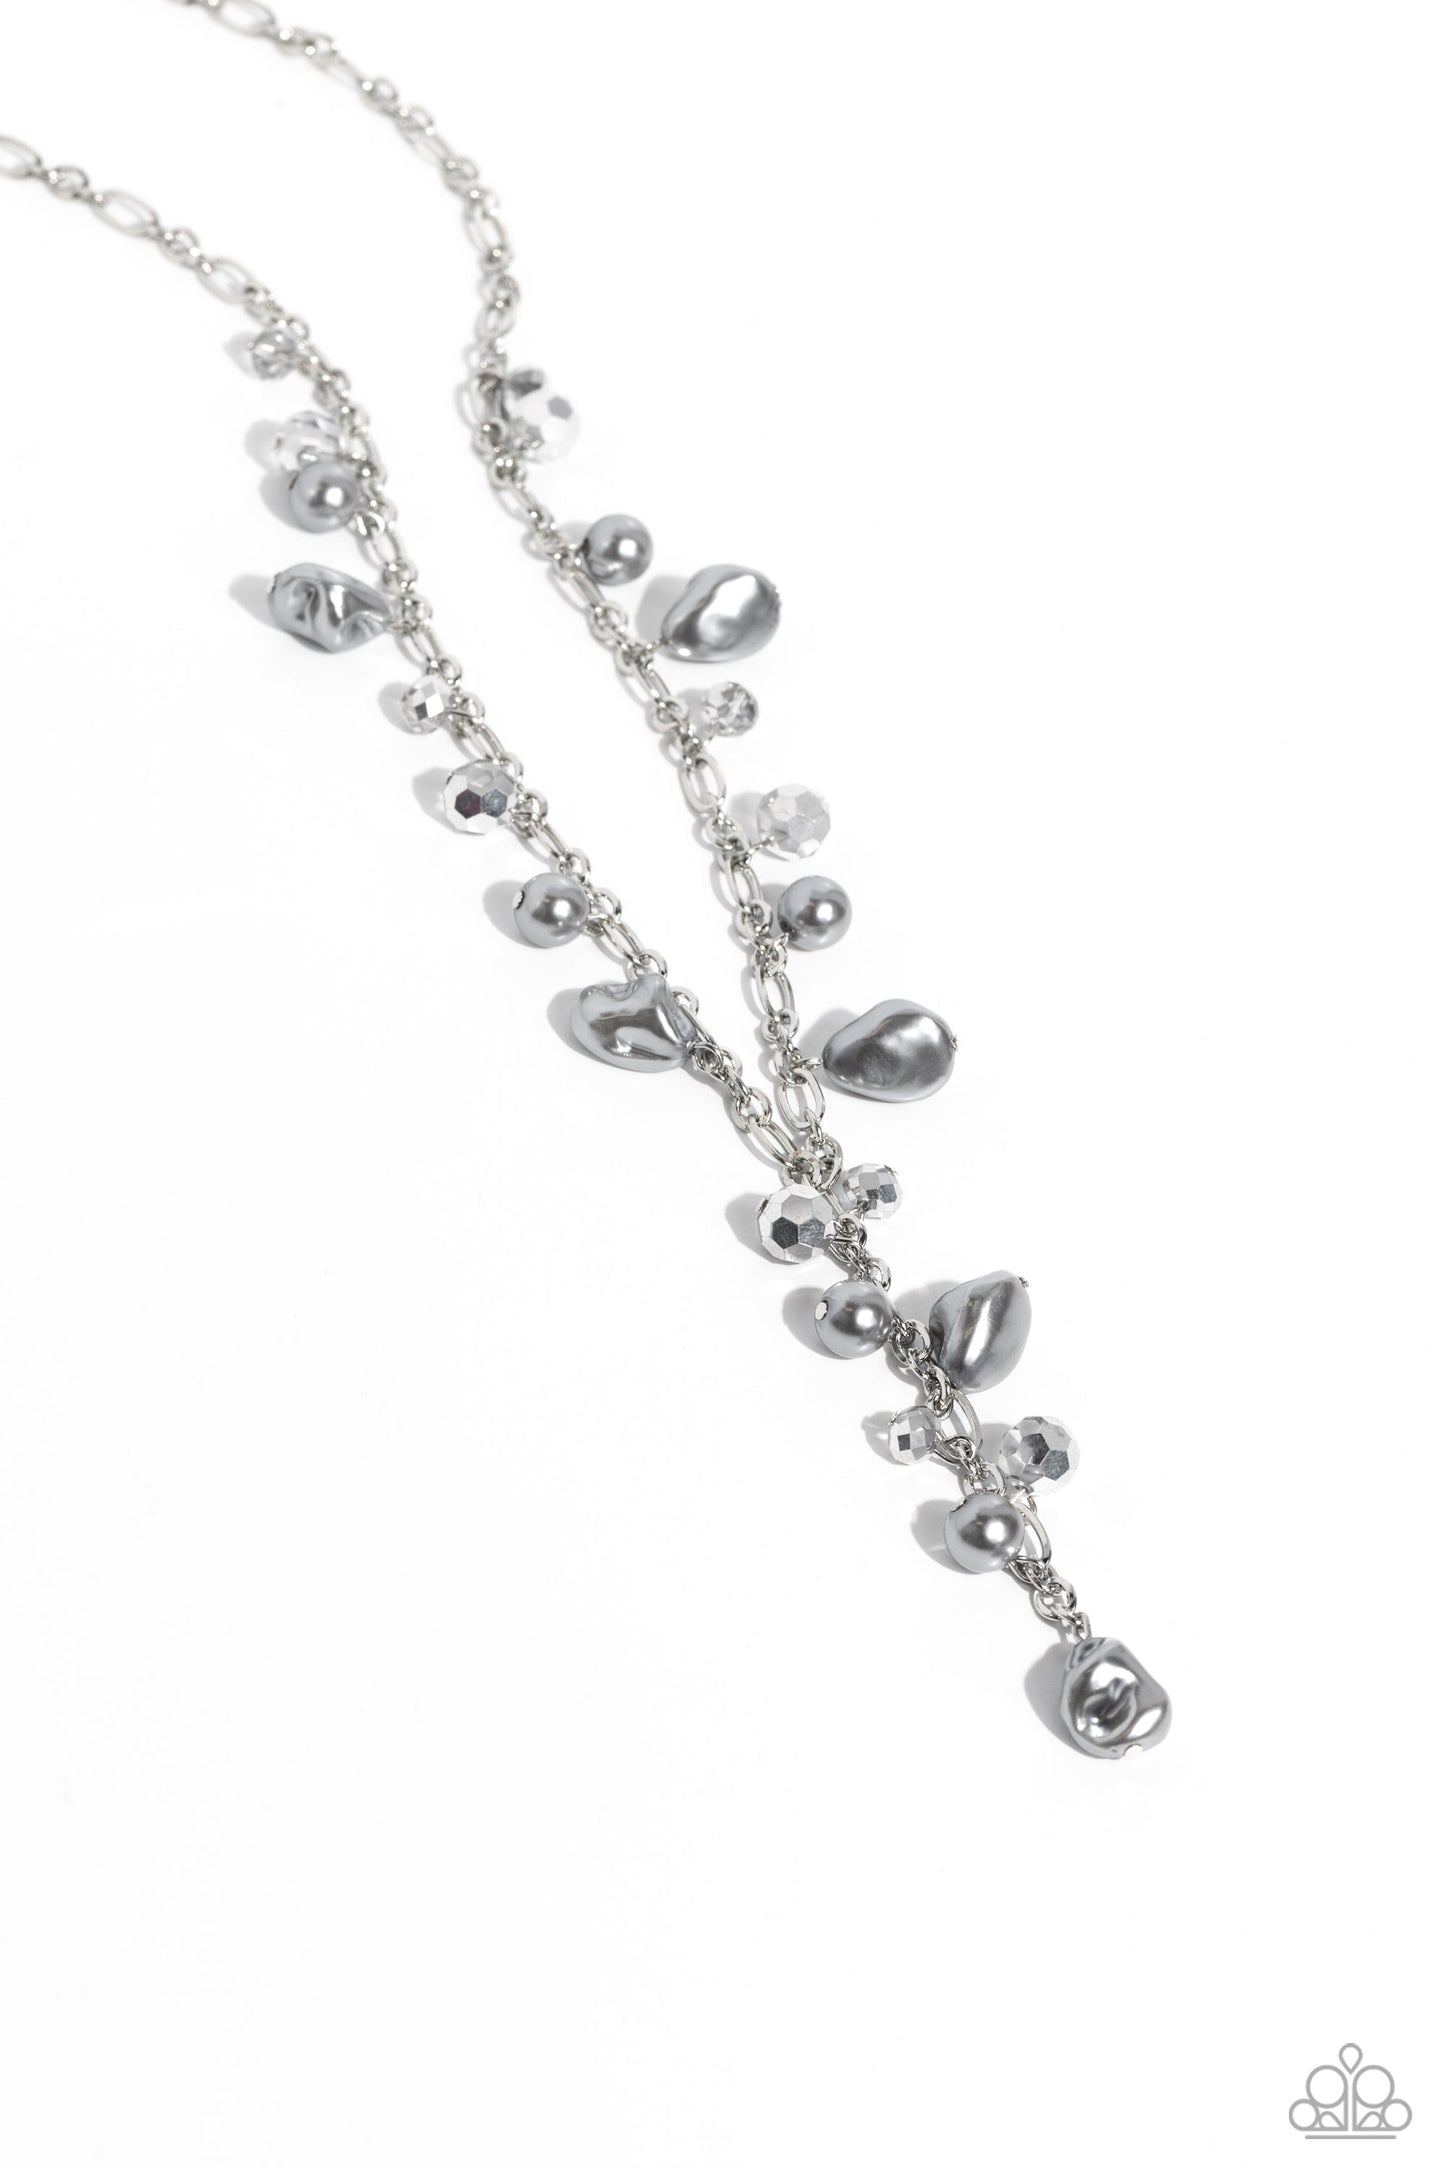 Admirable Array - silver - Paparazzi necklace